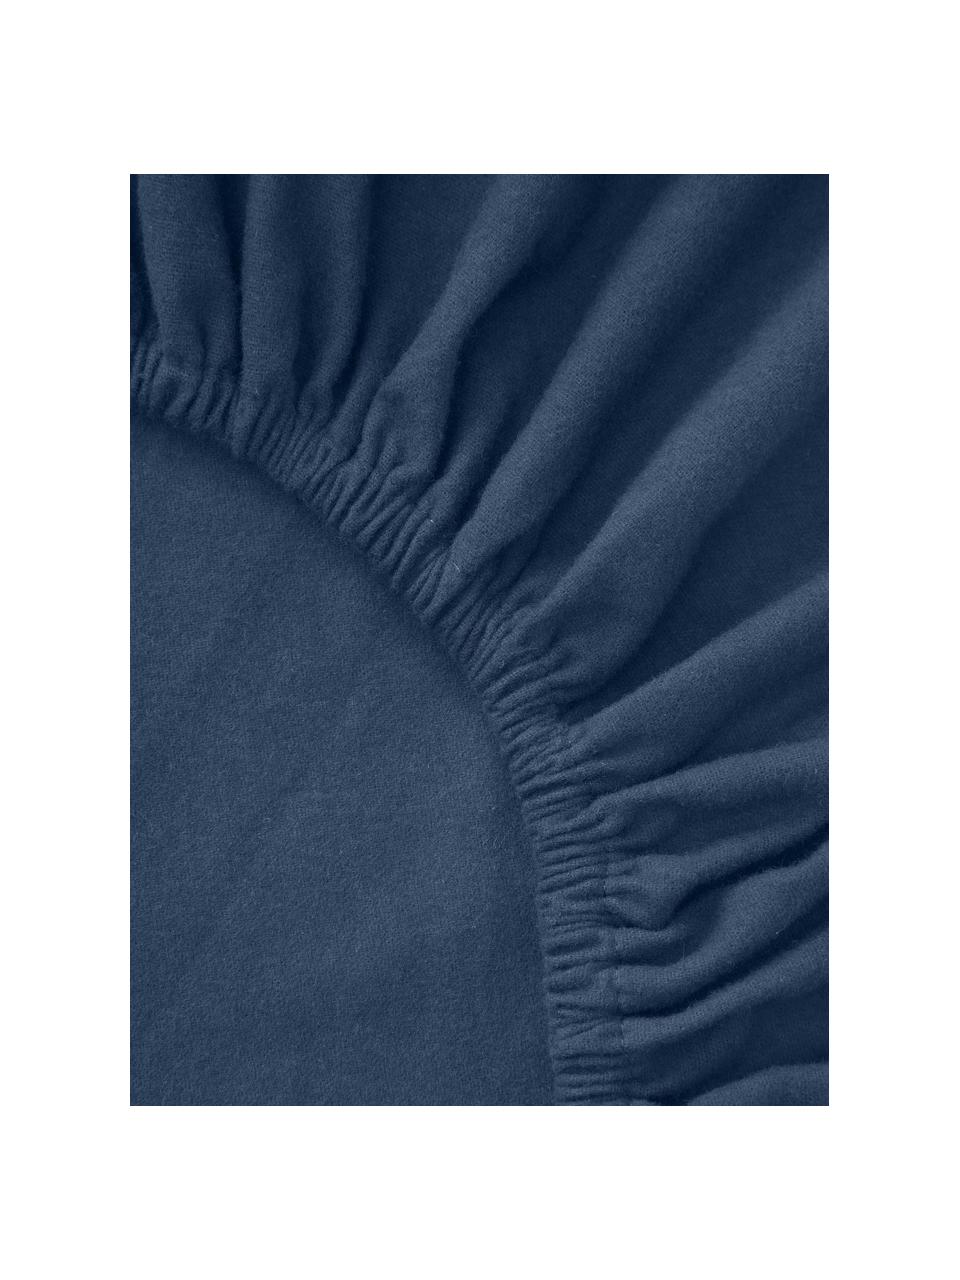 Topper hoeslaken Biba, flanel, Weeftechniek: flanel, Donkerblauw, B 200 x L 200 cm, H 15 cm